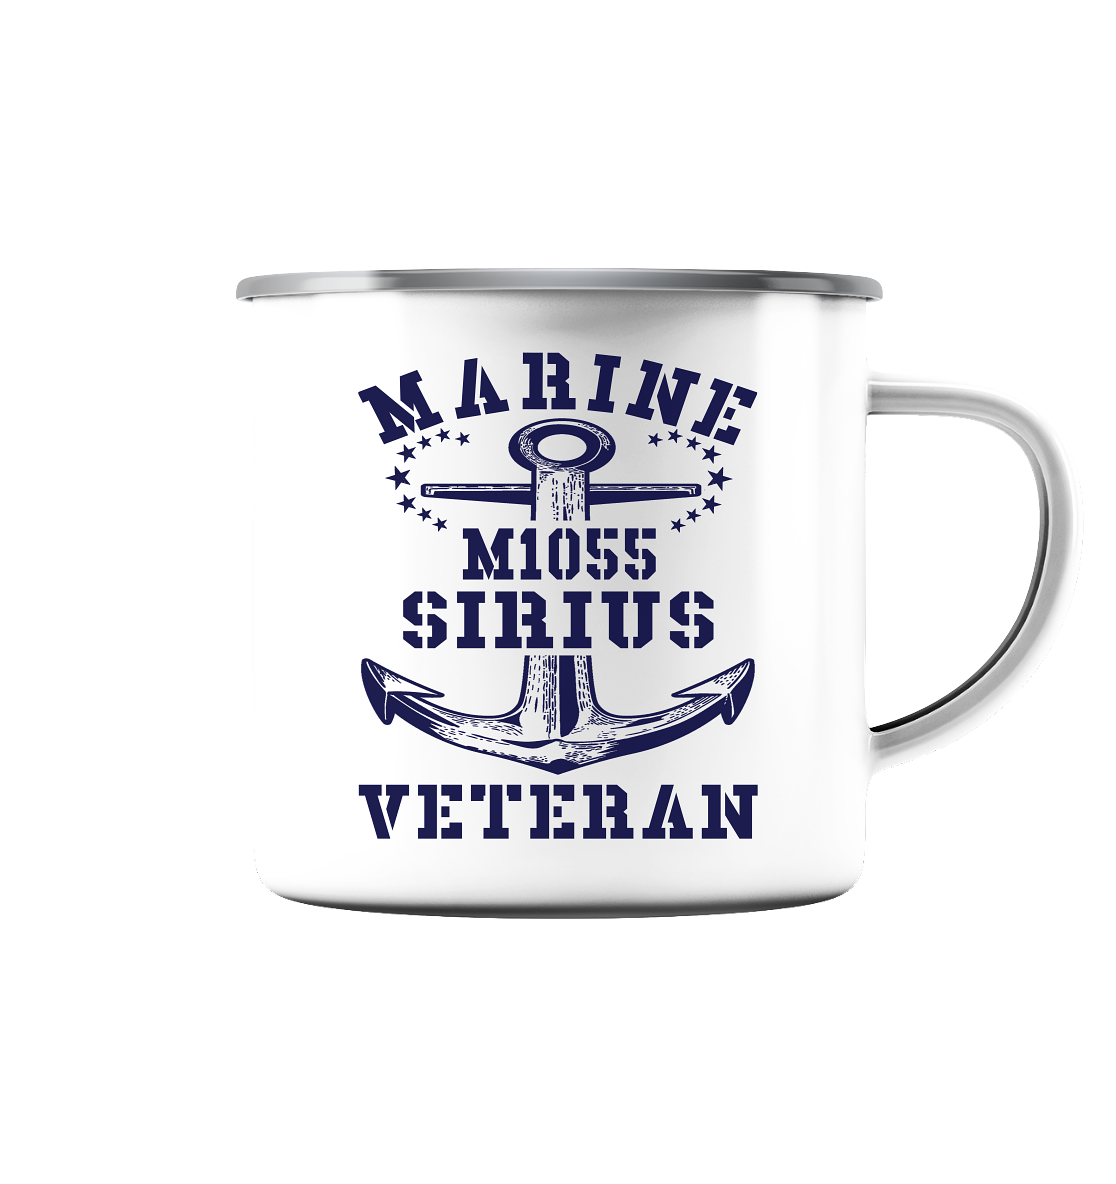 SM-Boot M1055 SIRIUS Marine Veteran - Emaille Tasse (Silber)